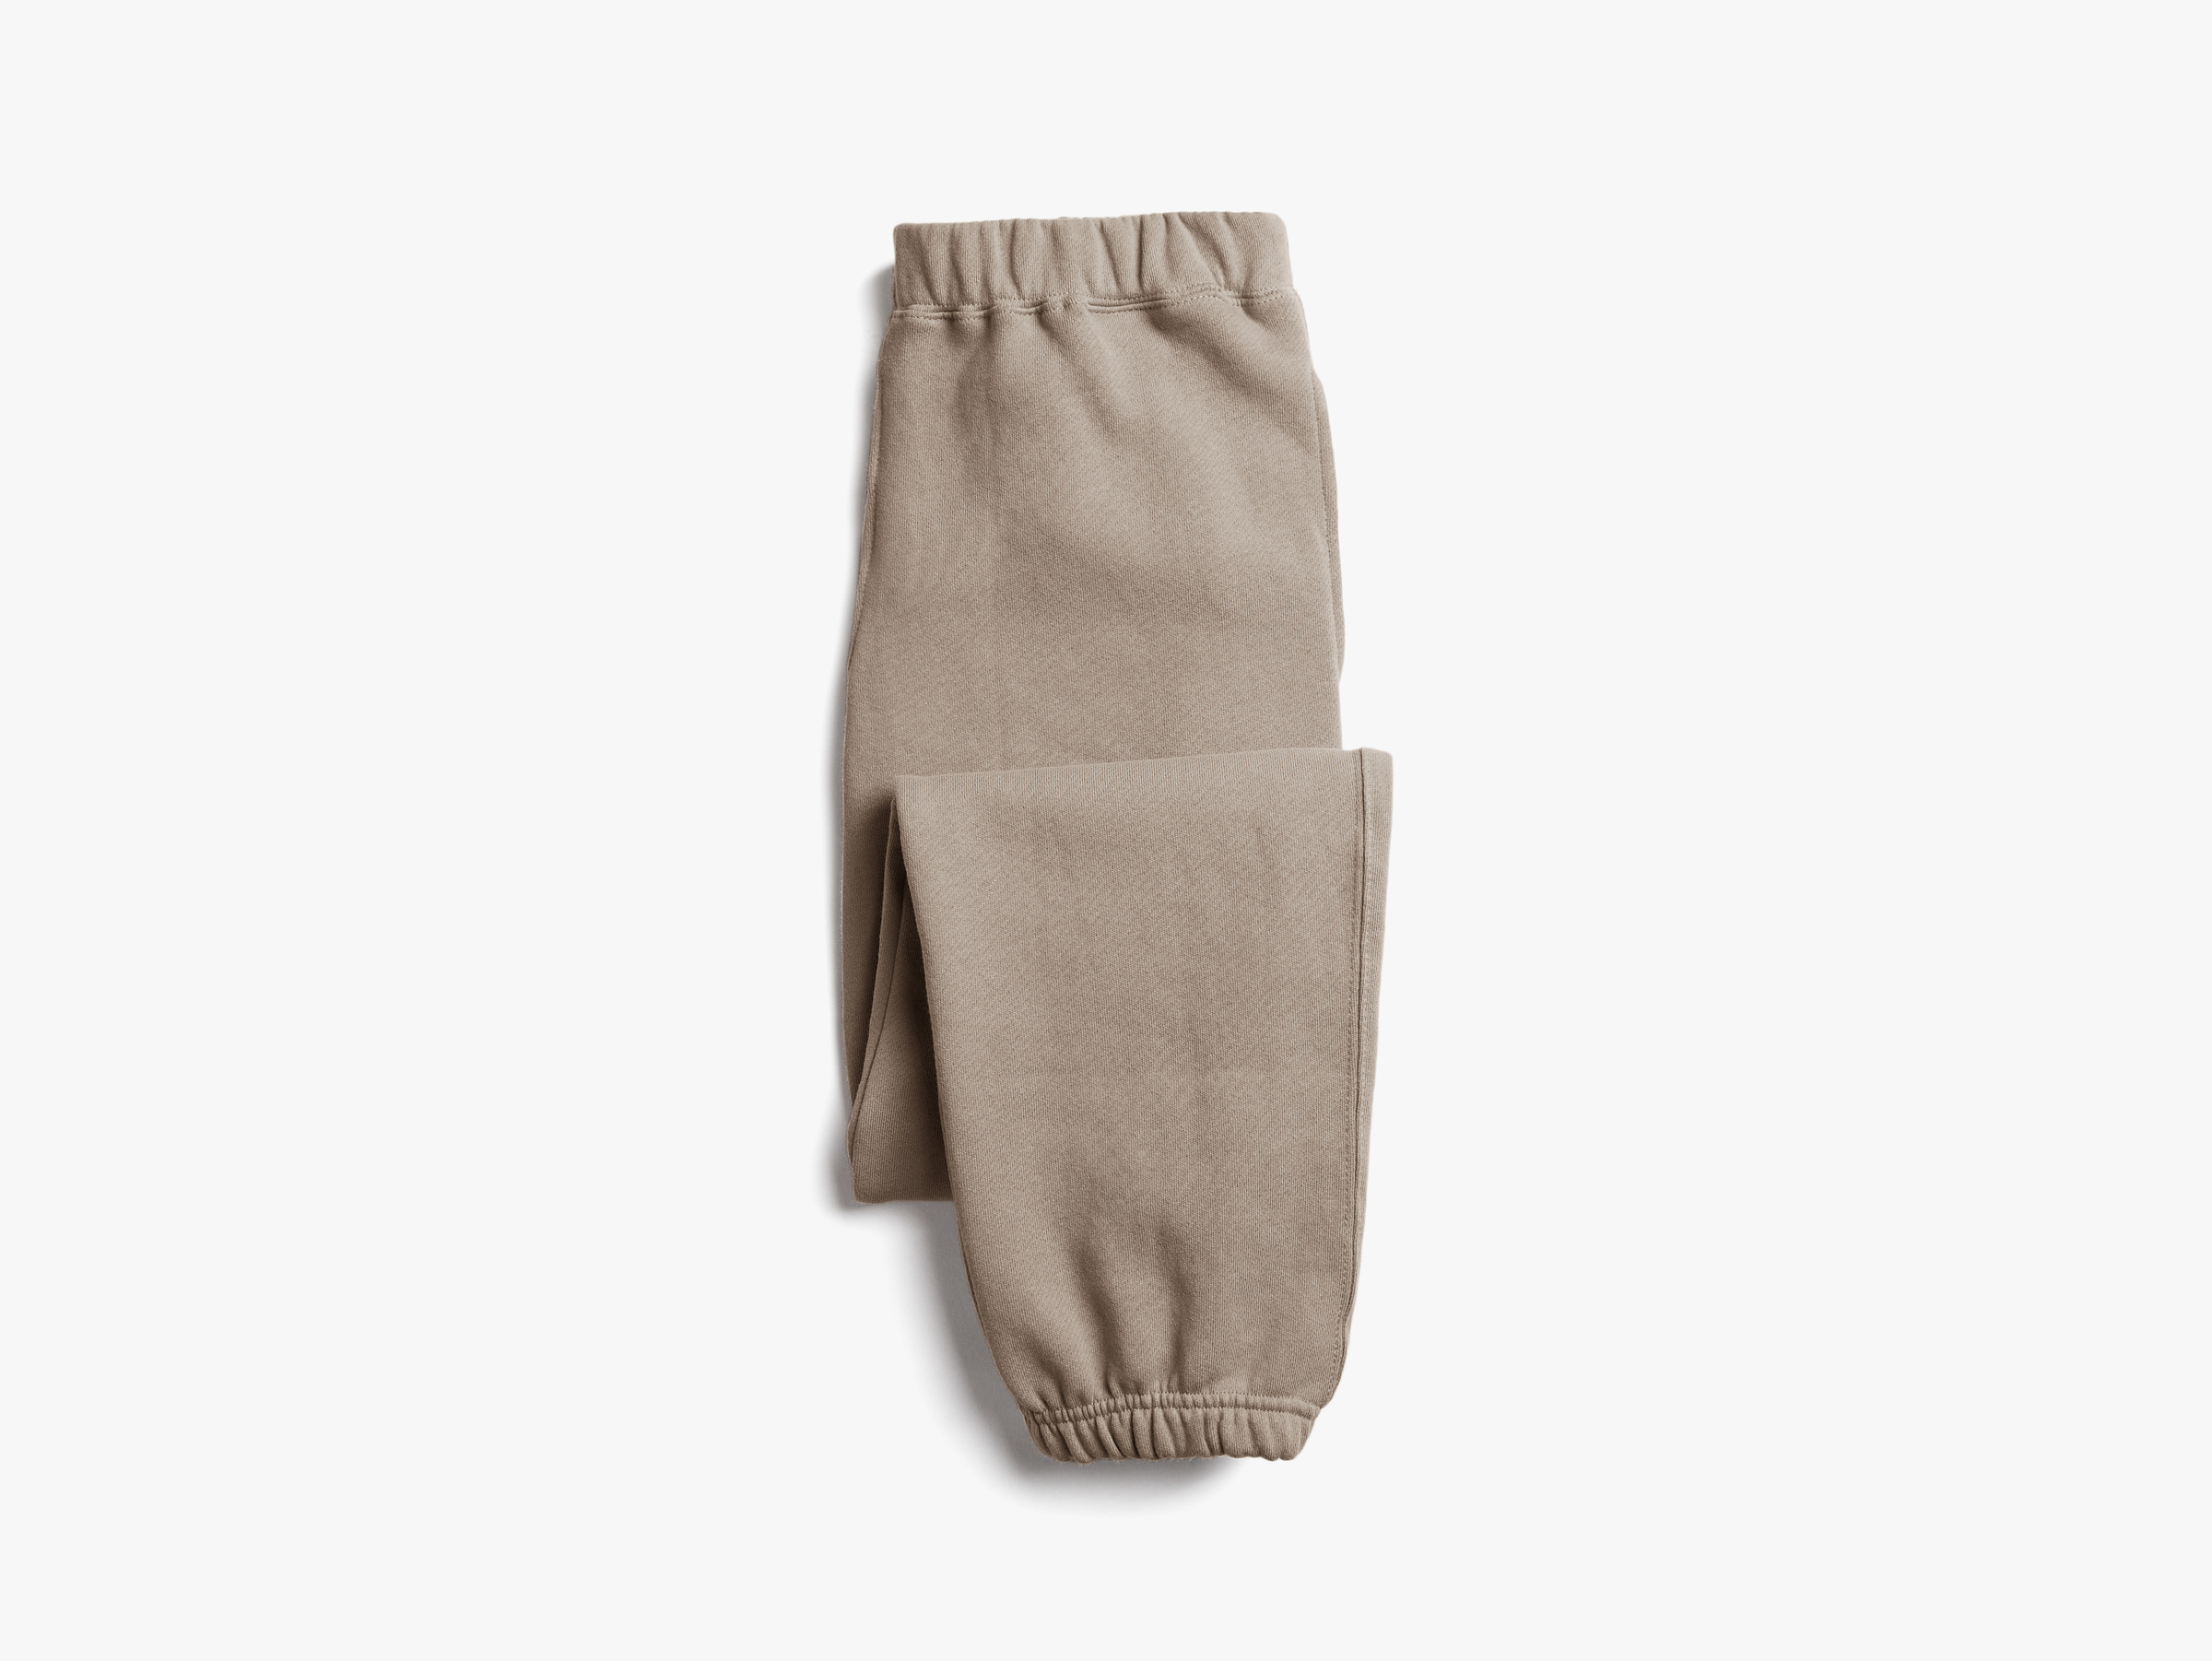 Vintage Women's Sweatpants - Grey - S